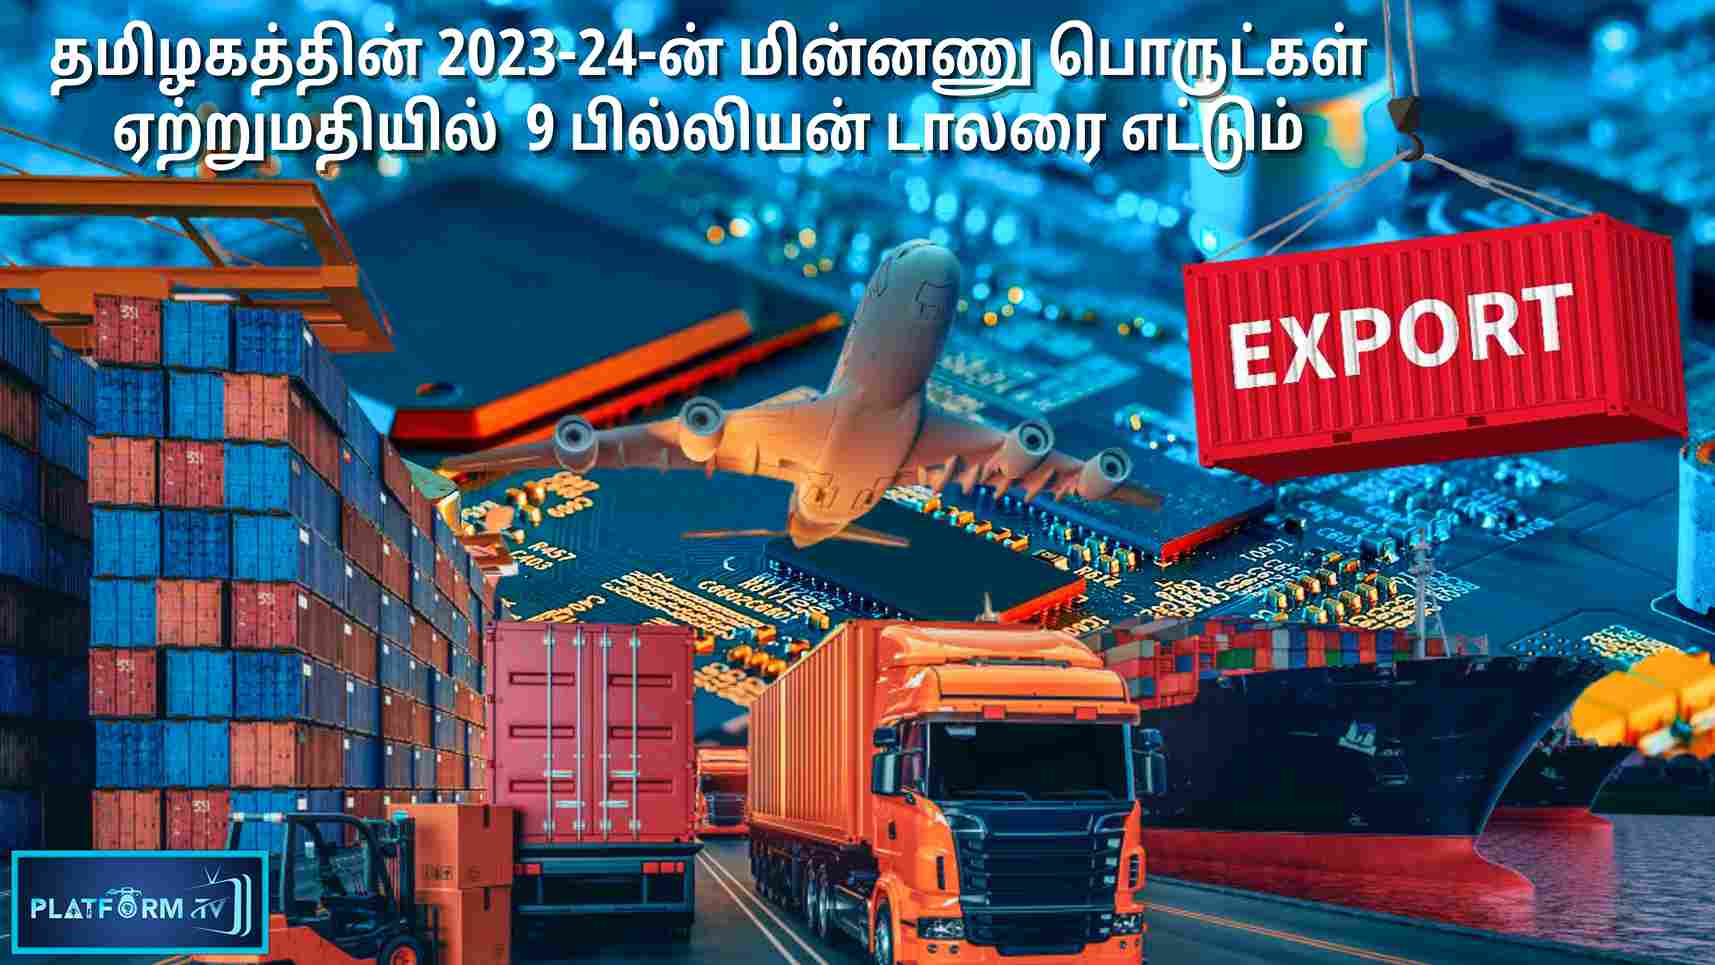 Electronic Goods Exports Reach 9 Billion Dollars - Platform Tamil